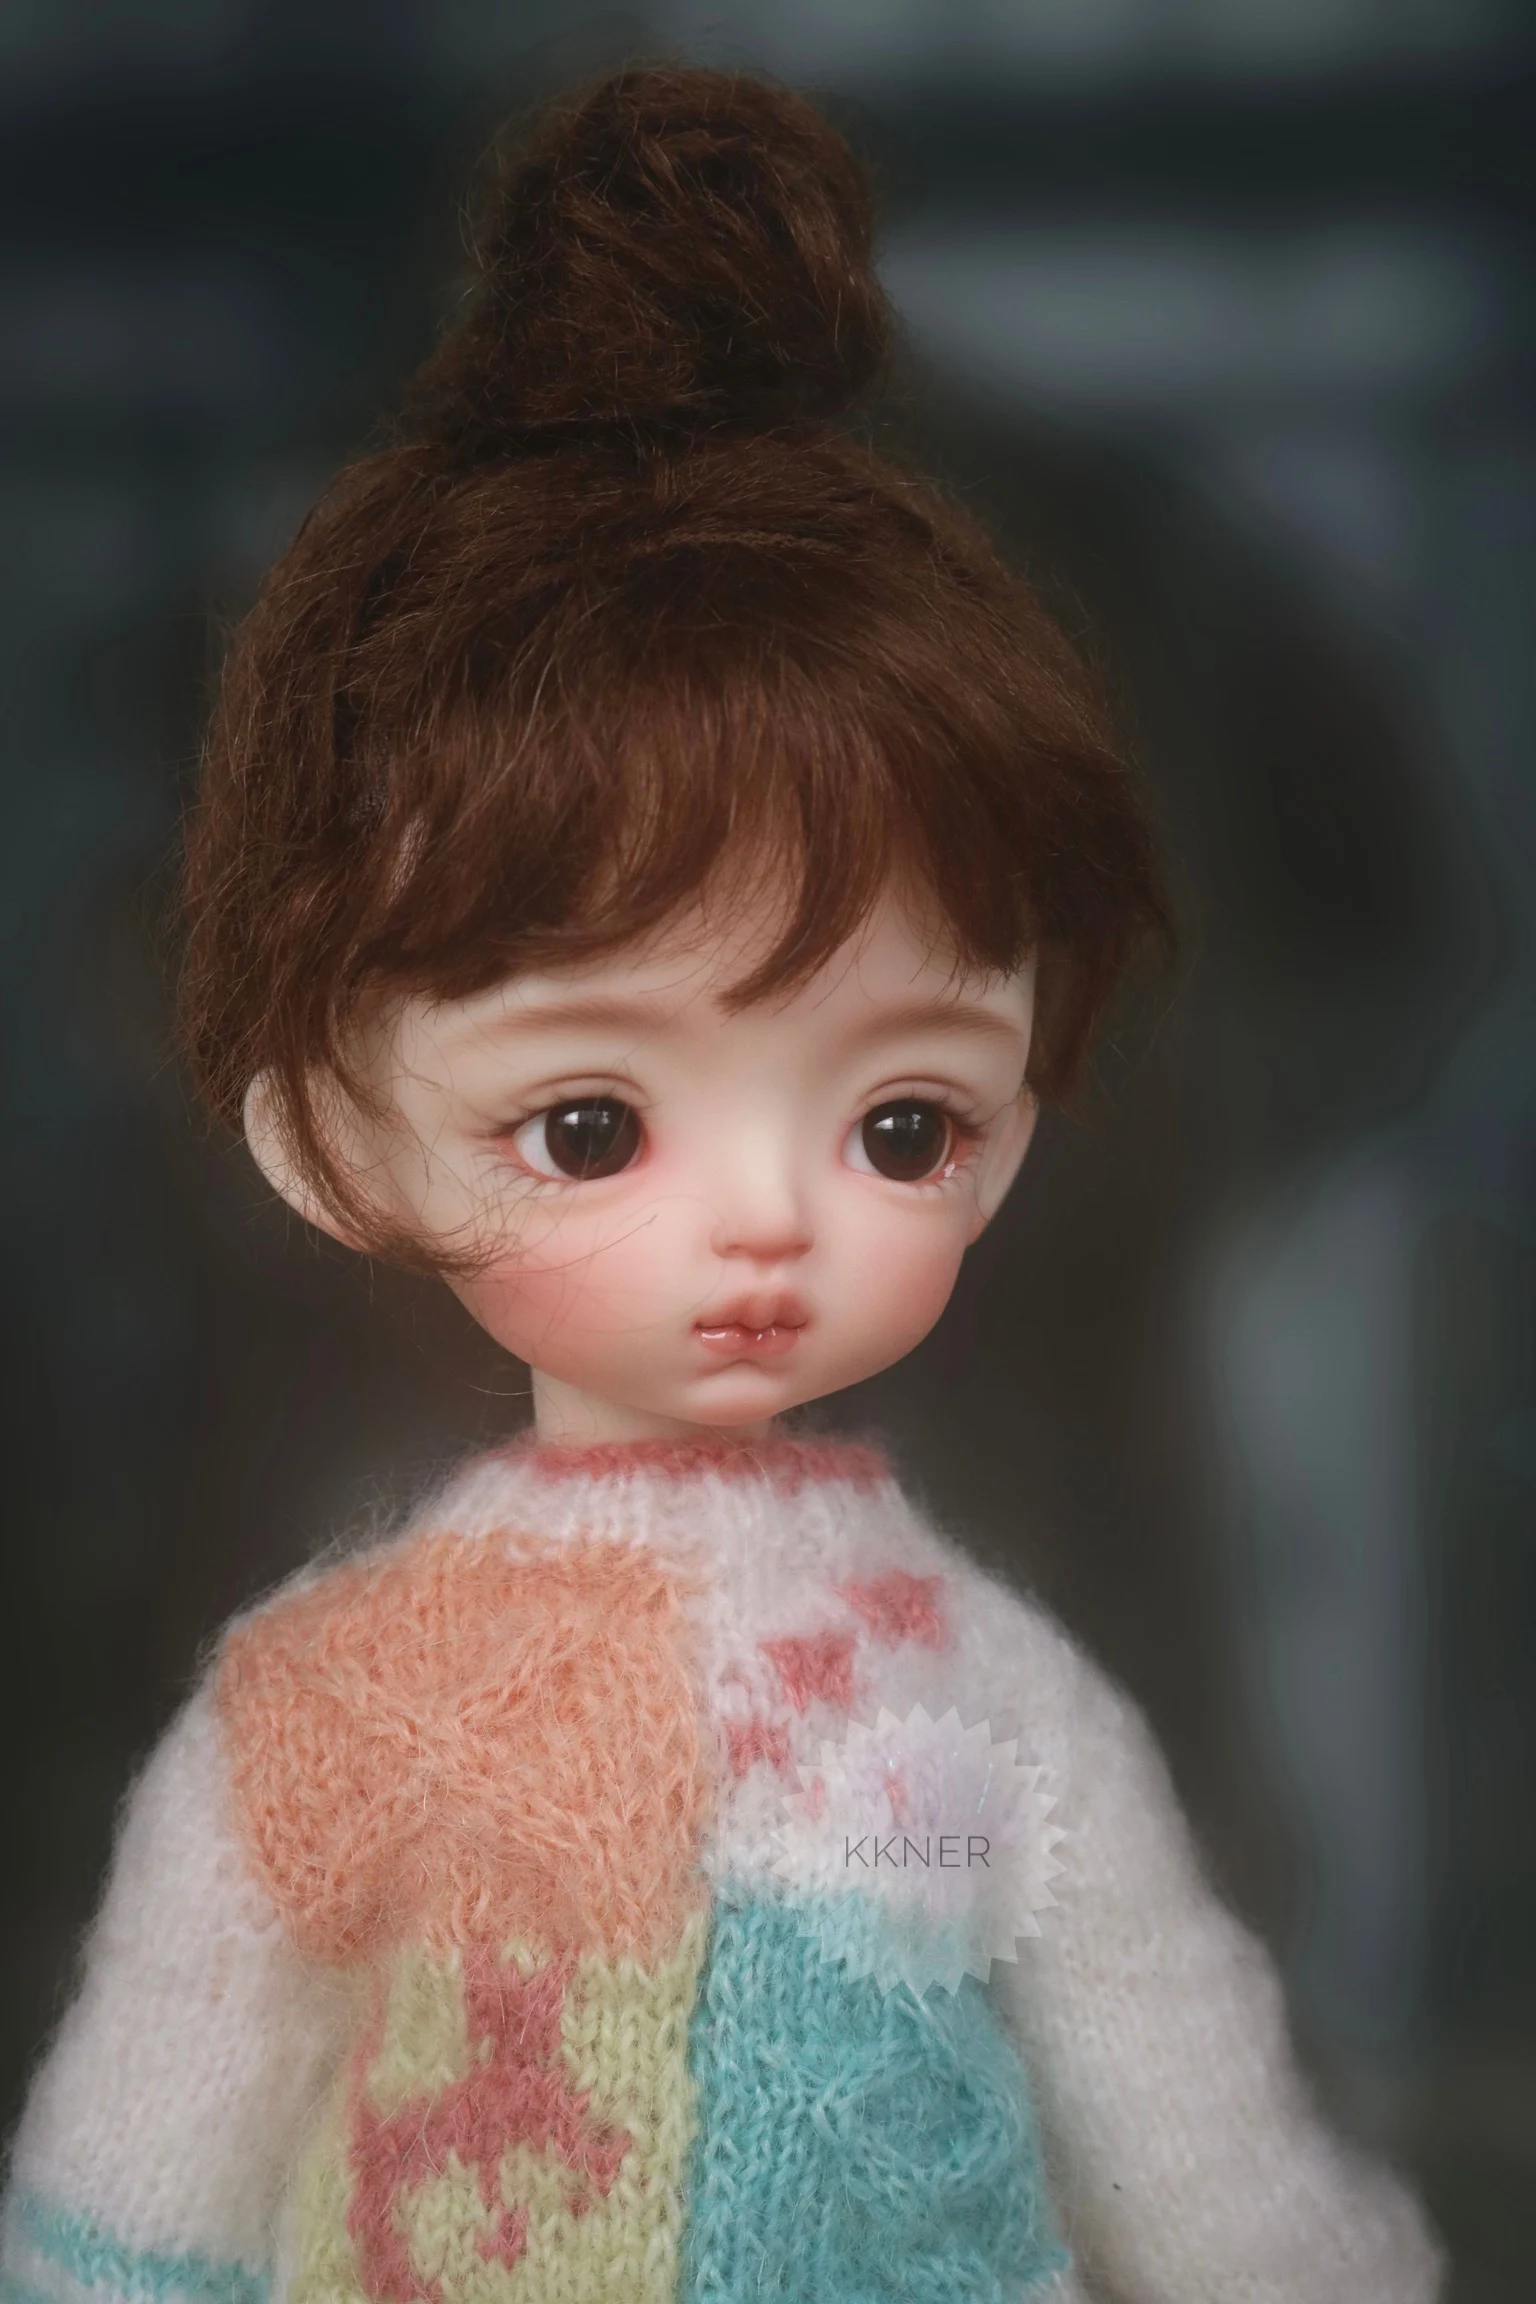 kkner-series-star-doll-head-ob11-bjd-6-inch-size-bjd-8-inch-size-doll